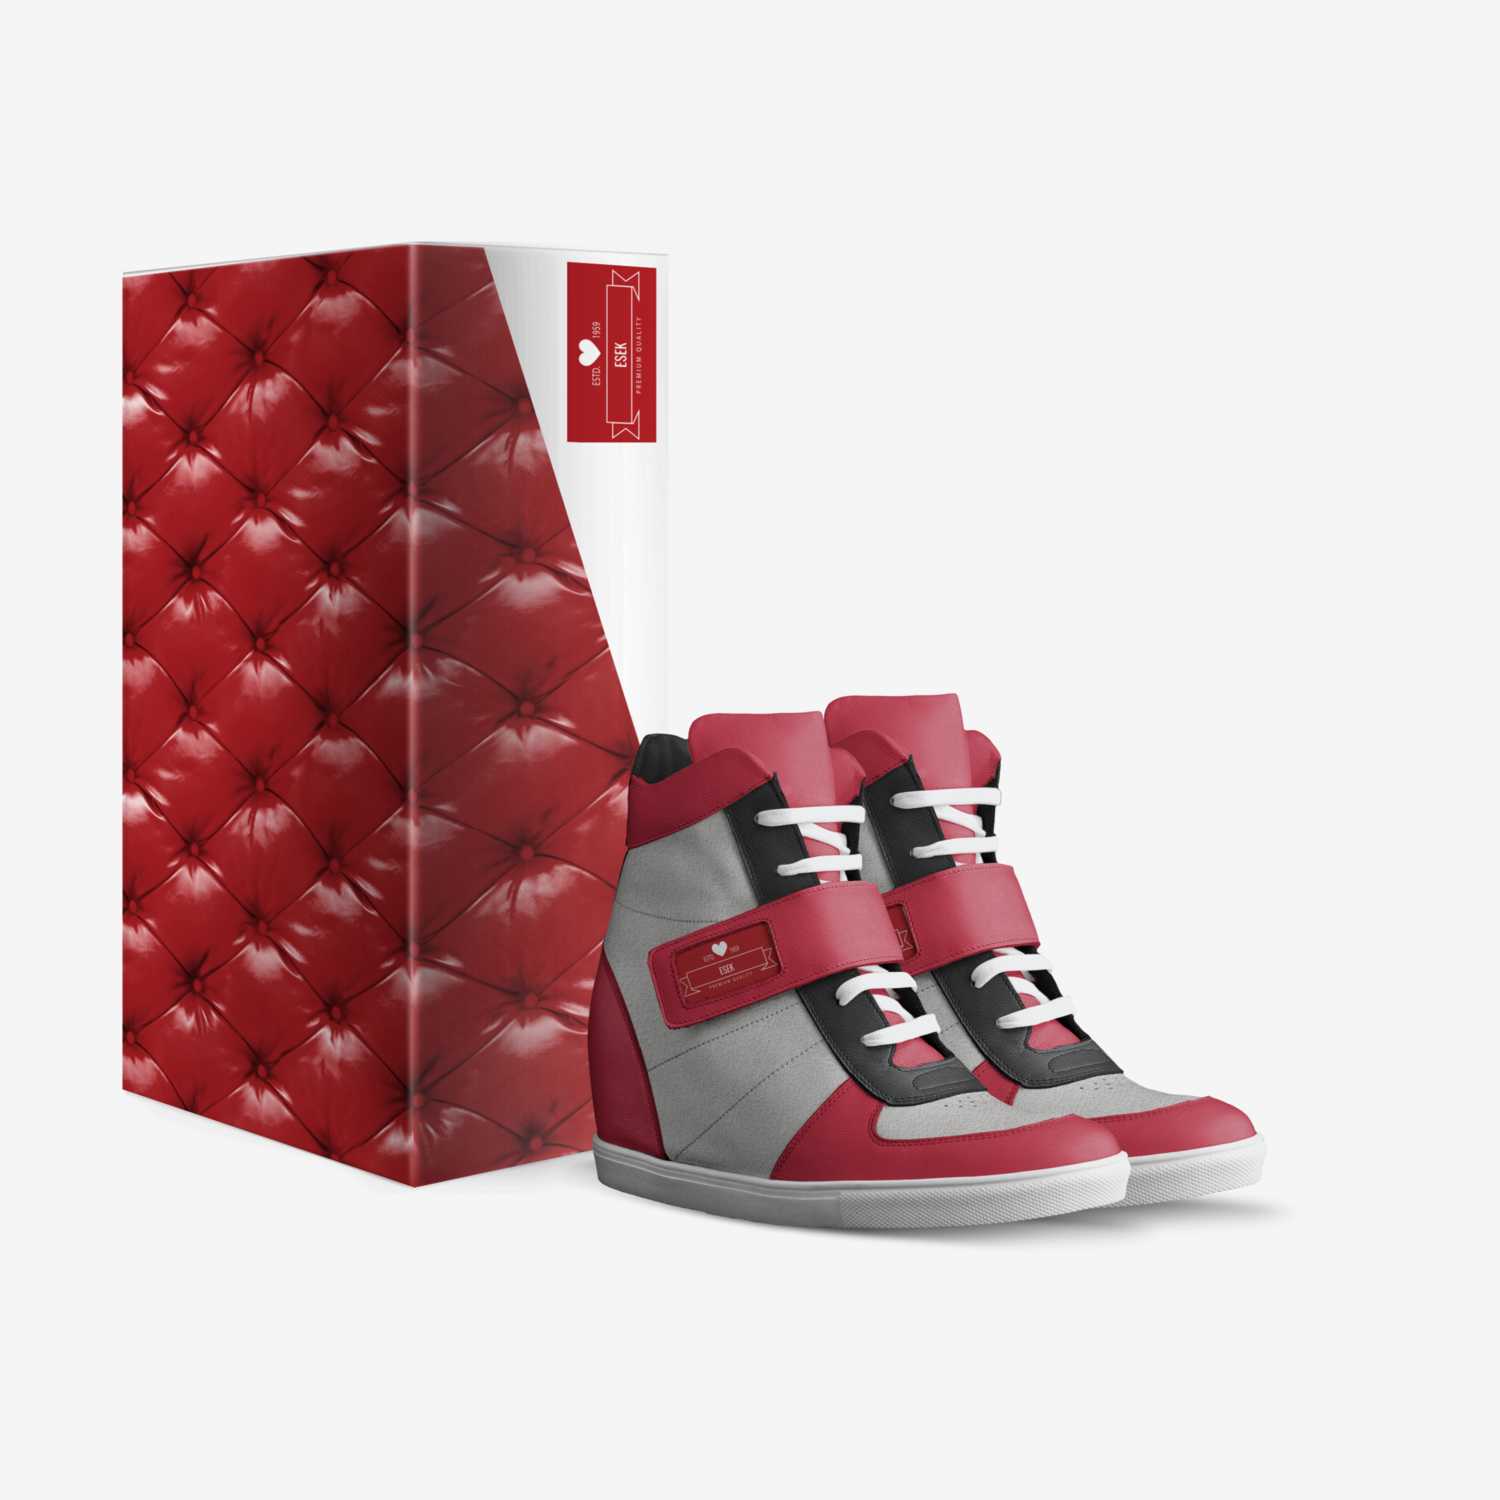 ESEK custom made in Italy shoes by Wayne Reed | Box view